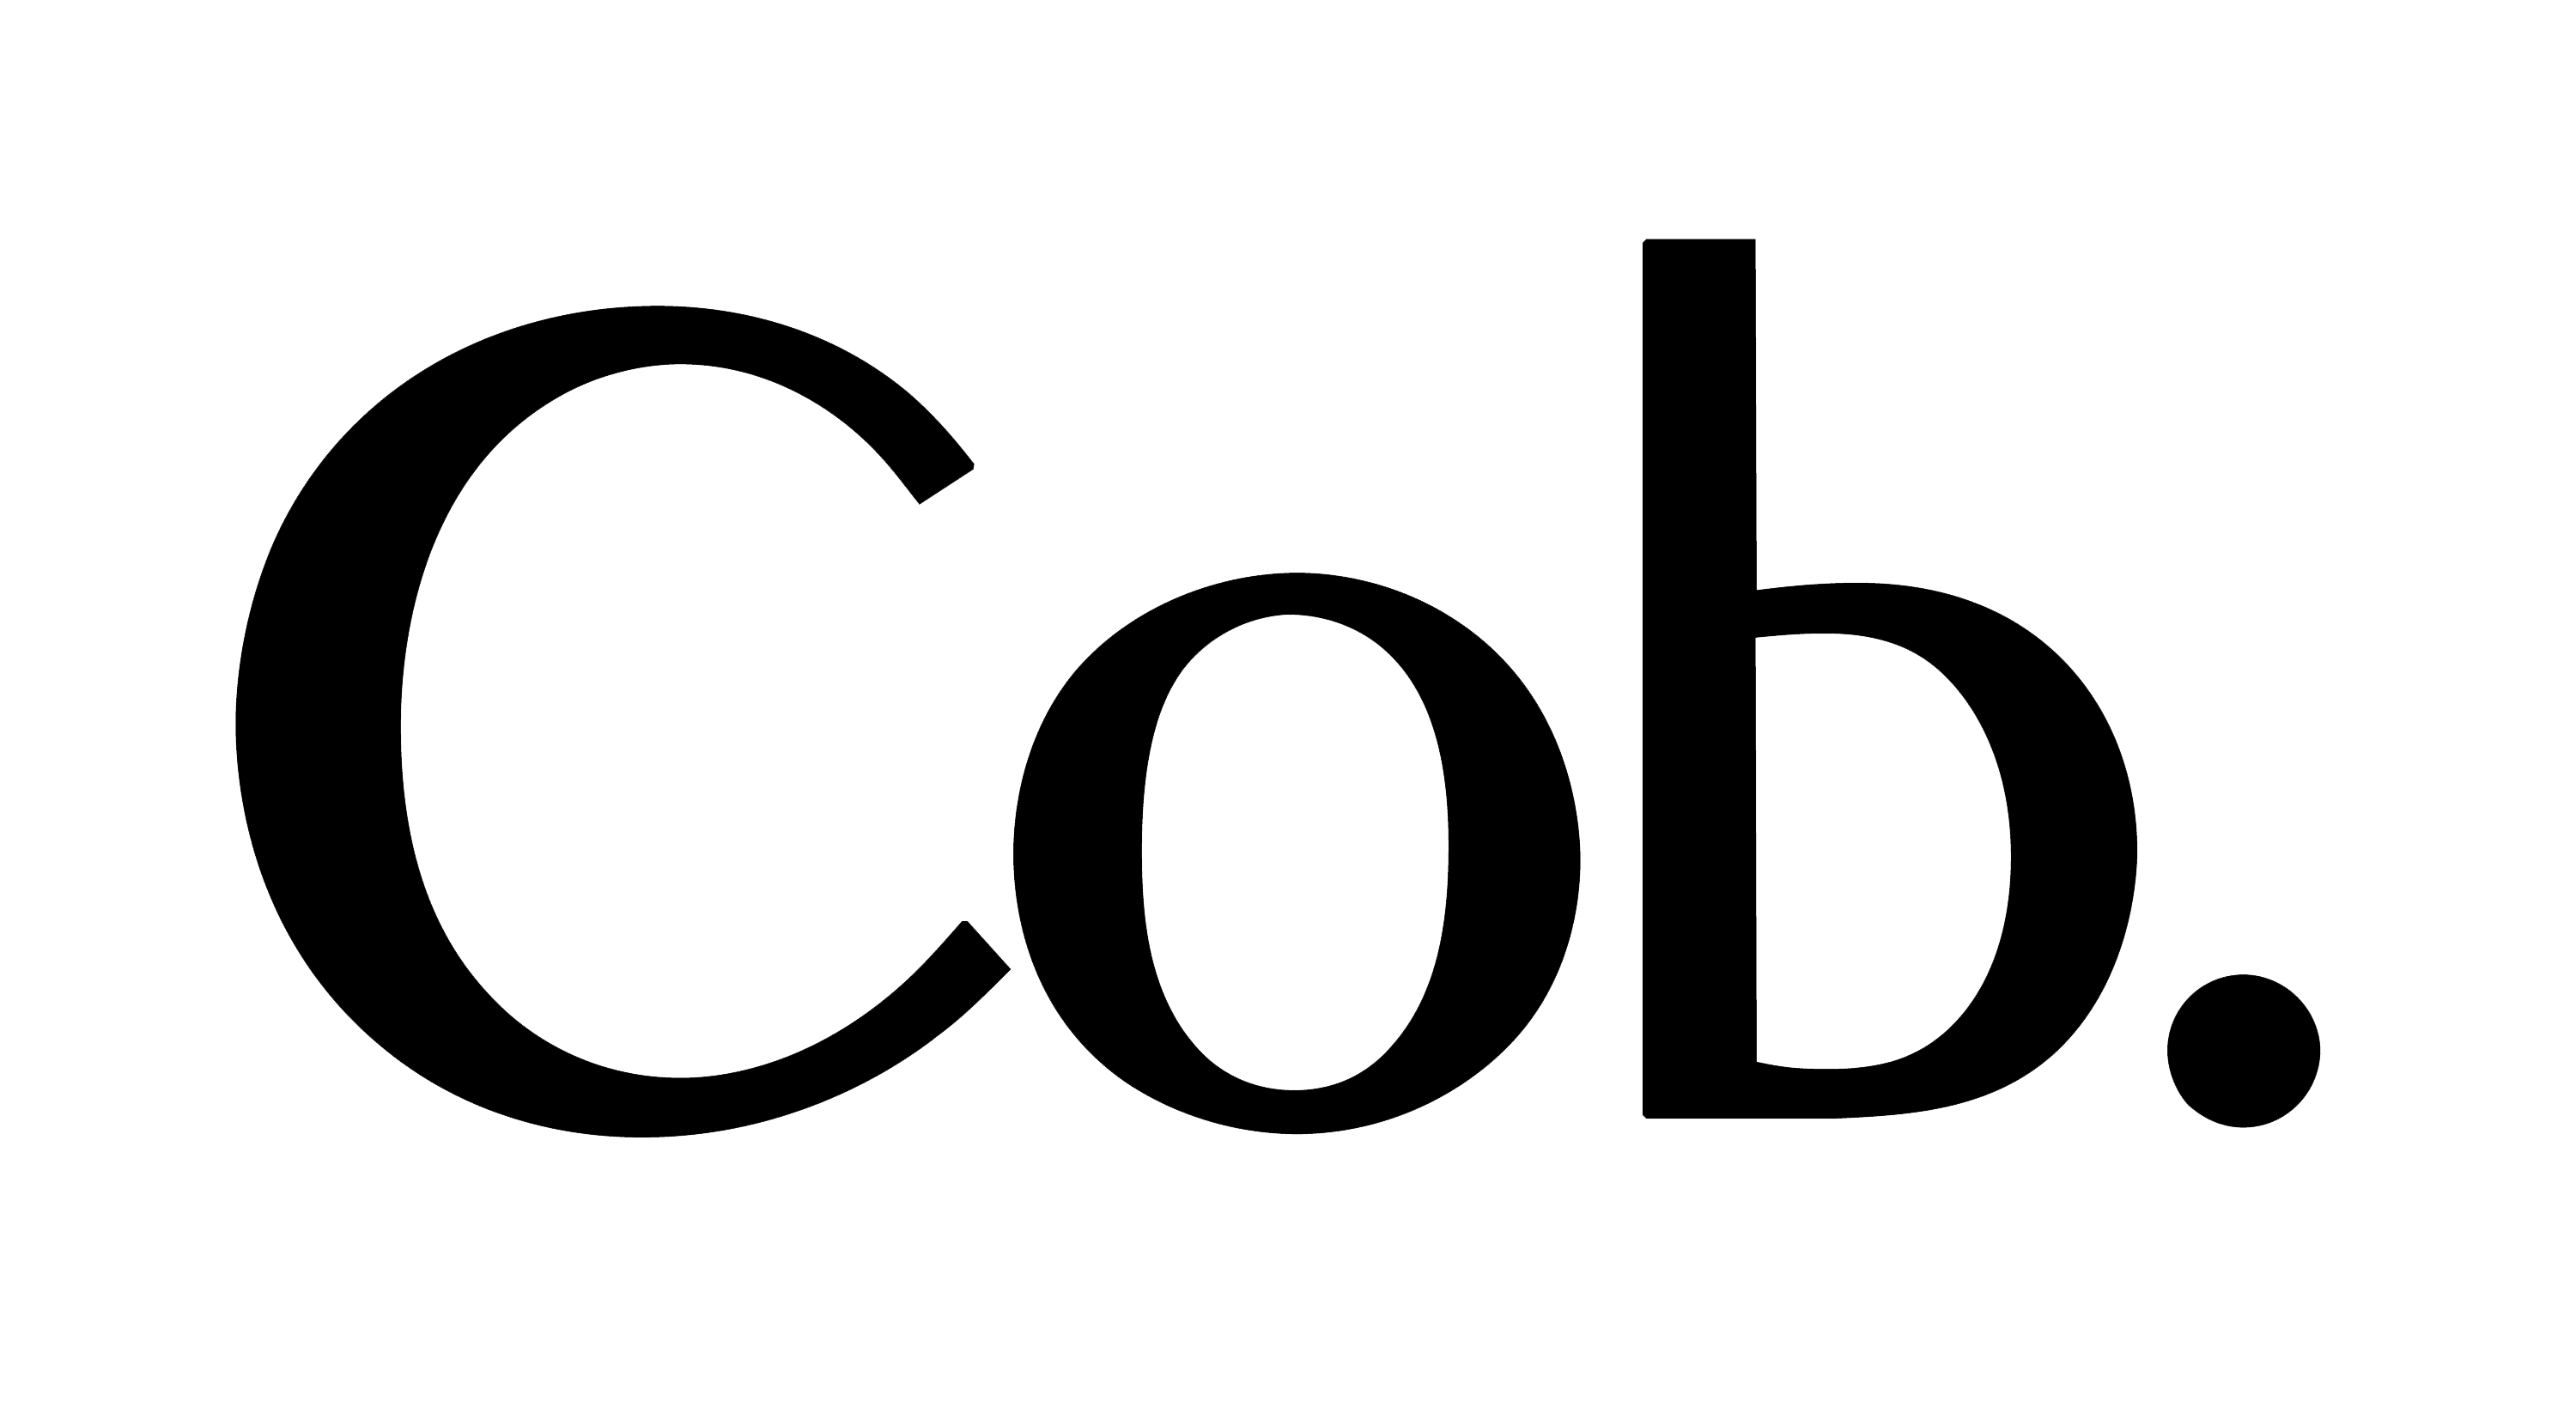 Cob Gallery company logo